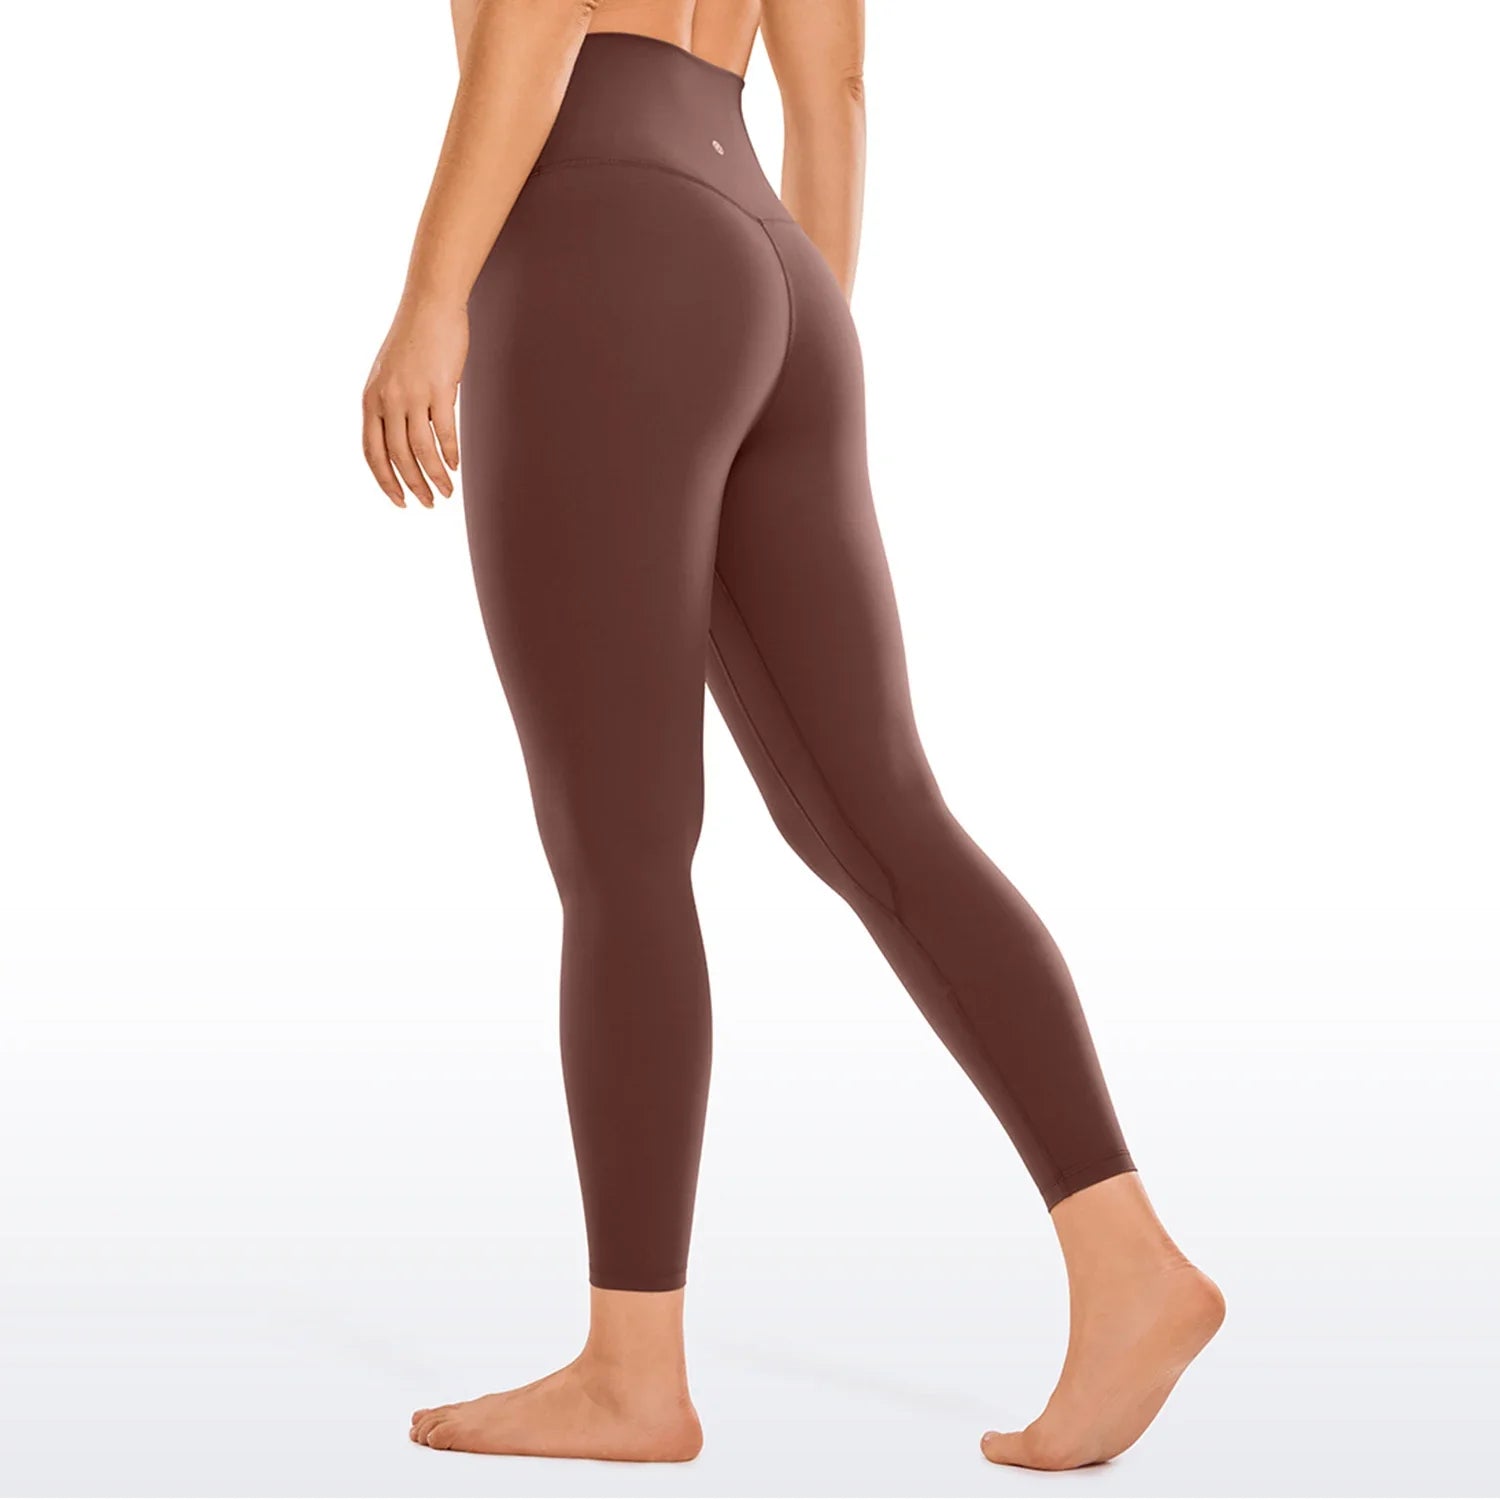 Canmol High Waist Yoga Leggings 25" - Soft Matte Workout Tights Running Pants